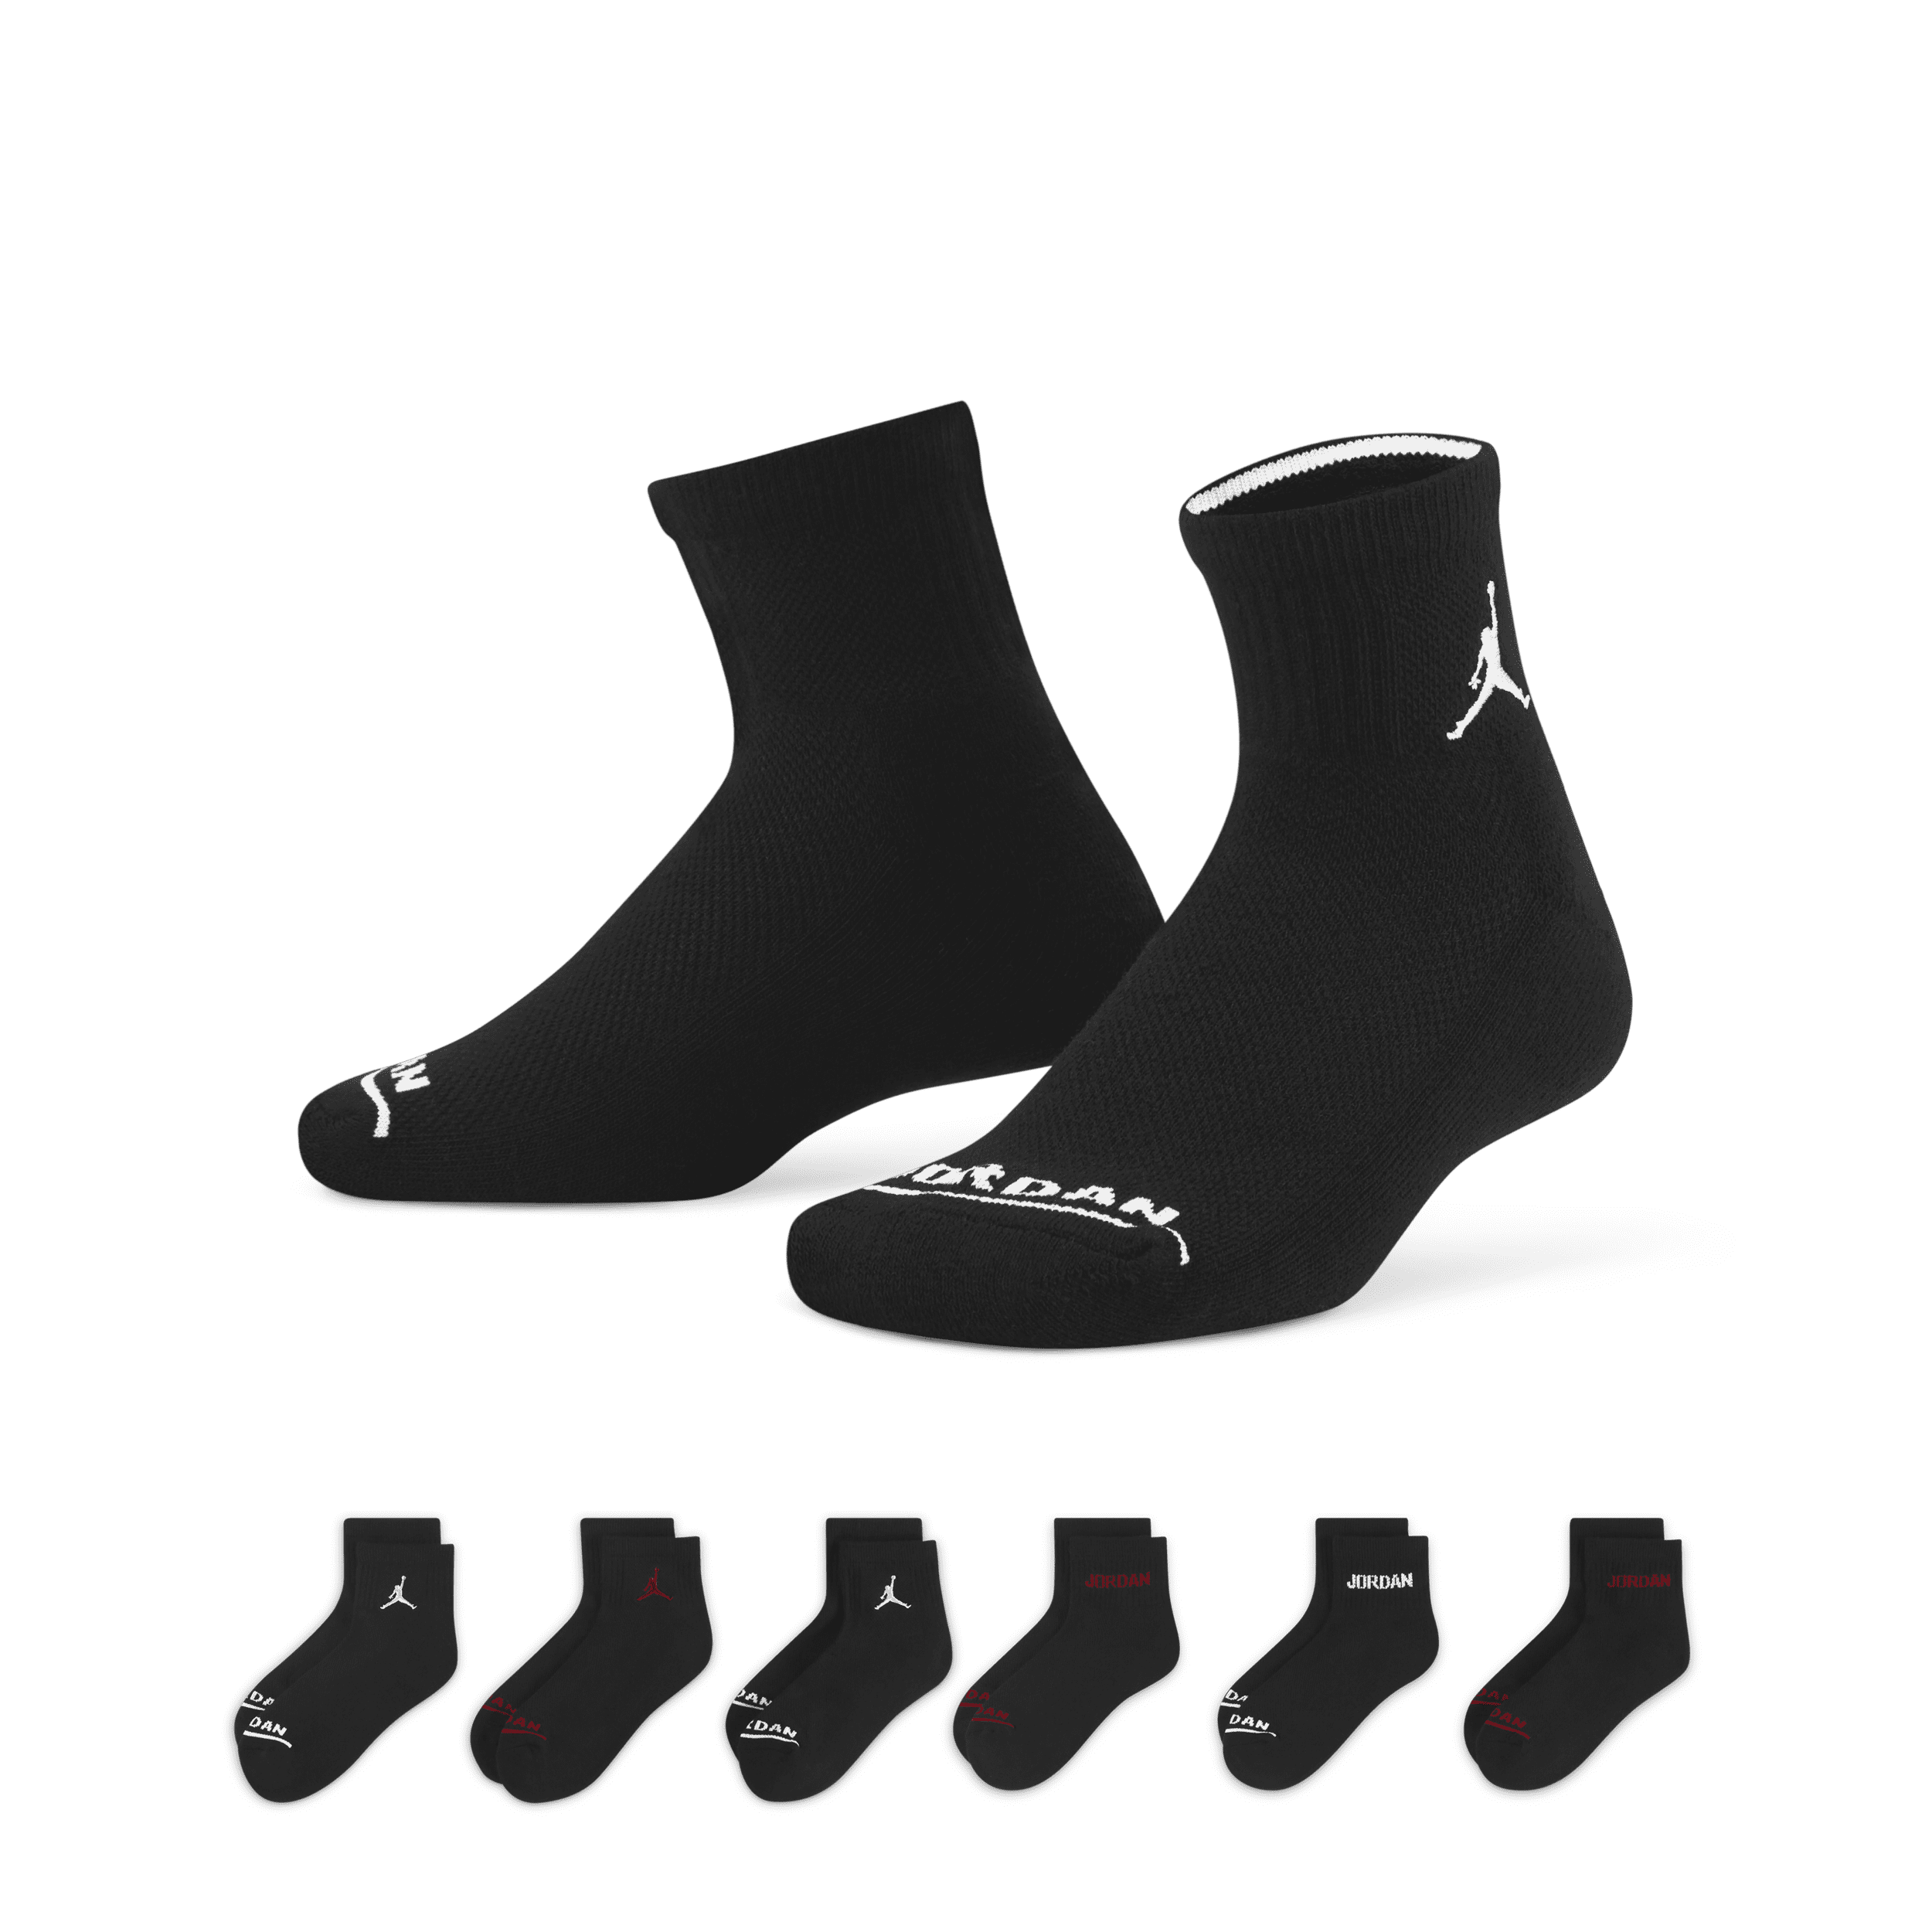 Nike Calze alla caviglia Jordan – Bambino/a (6 paia) - Nero